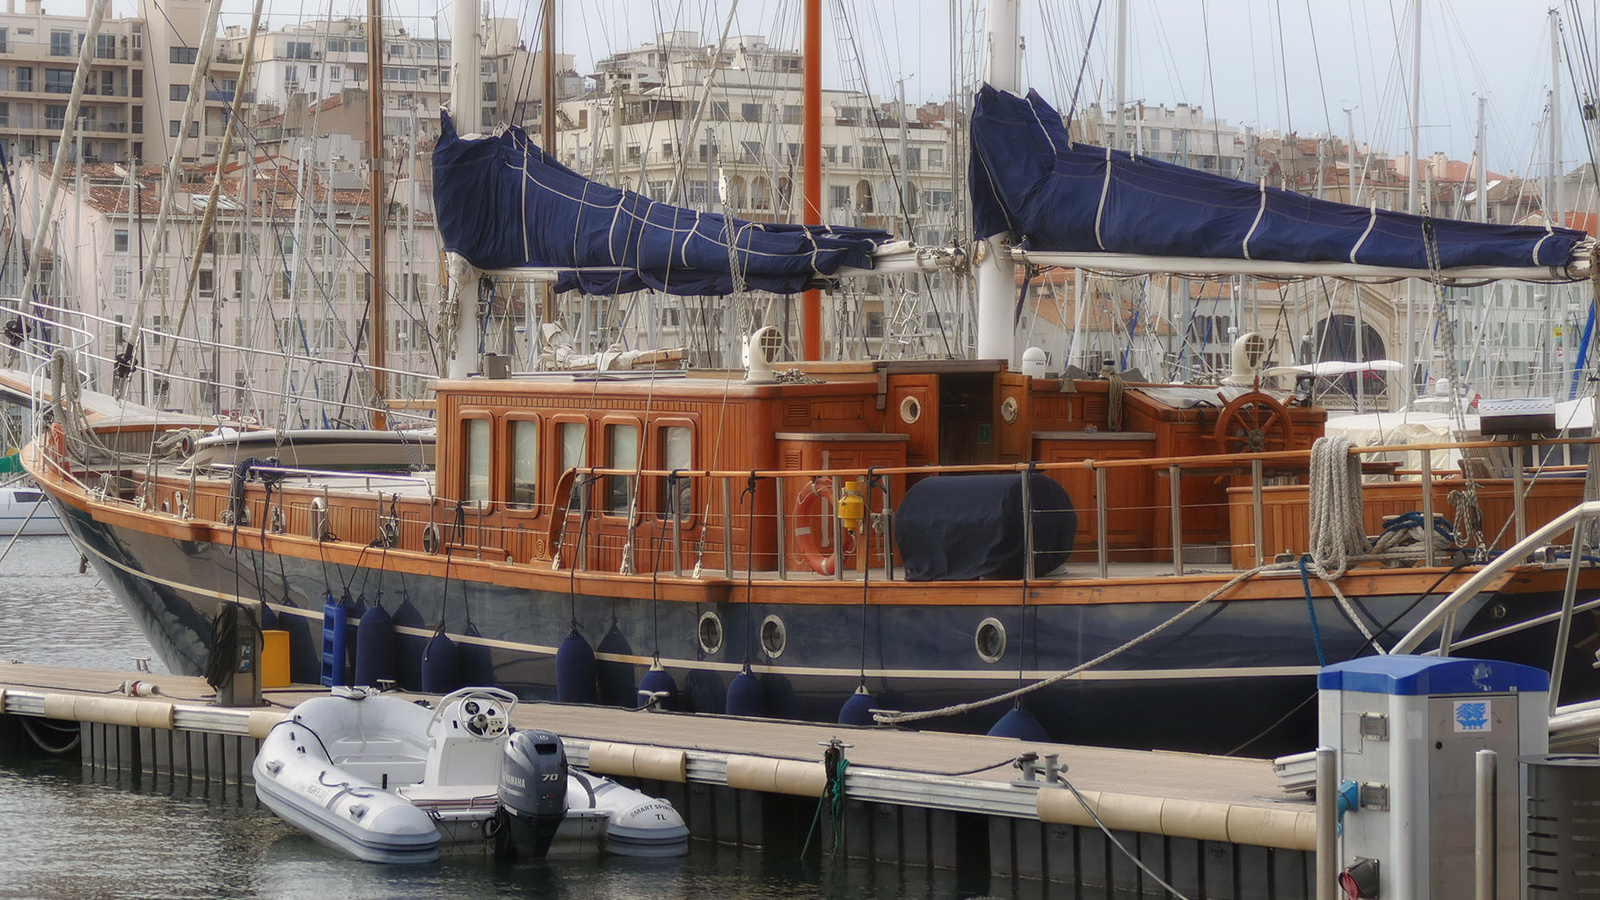 Costa - Marseille kikötő - retro vitorlás